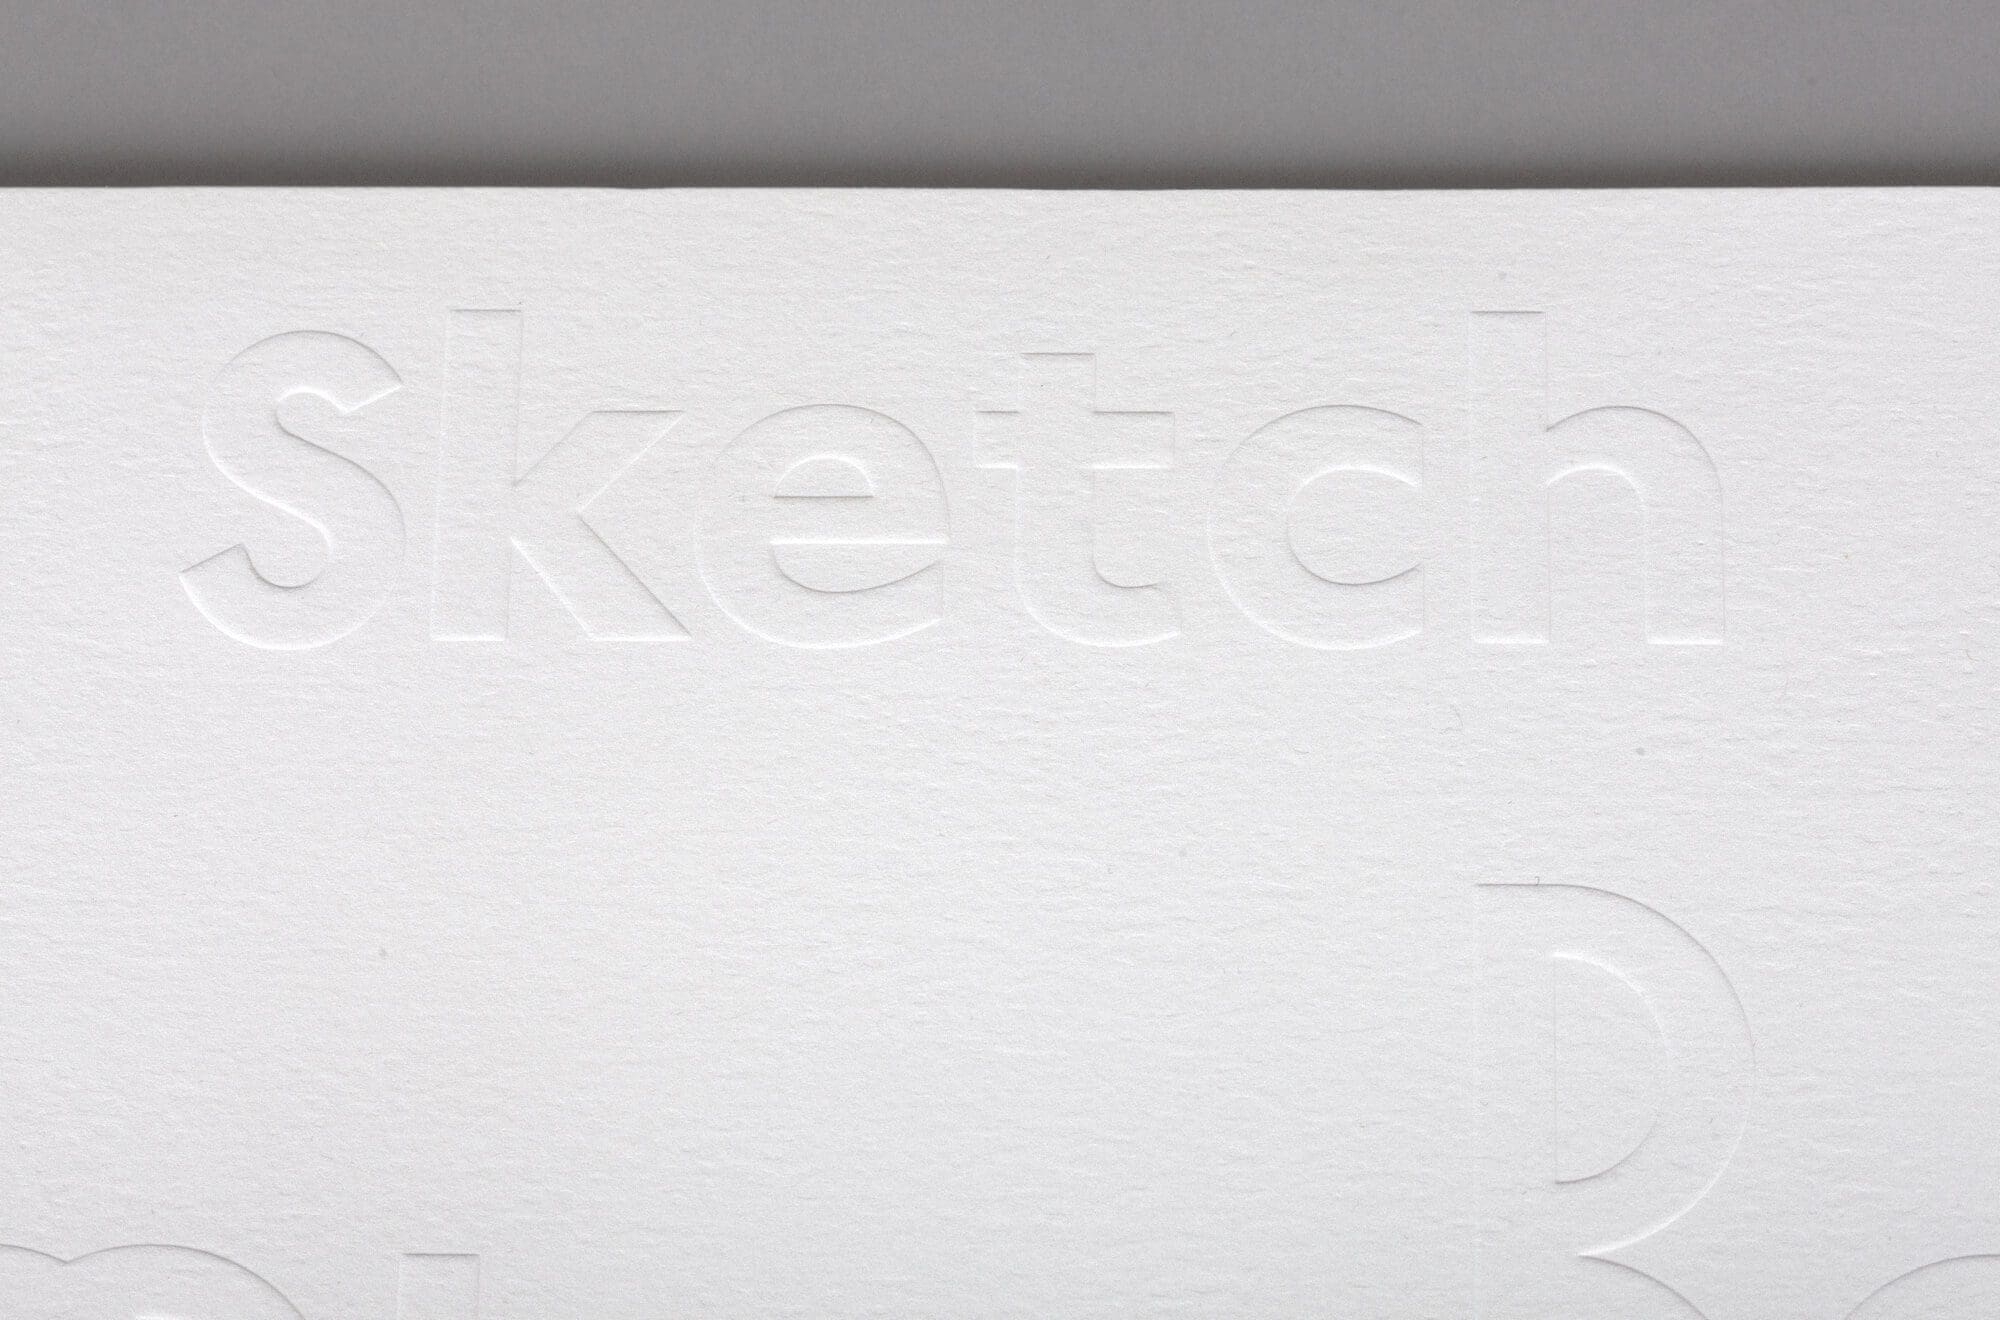 gaufrage et typographie bijou editorial en l'honneur du sketch signé ichetkar